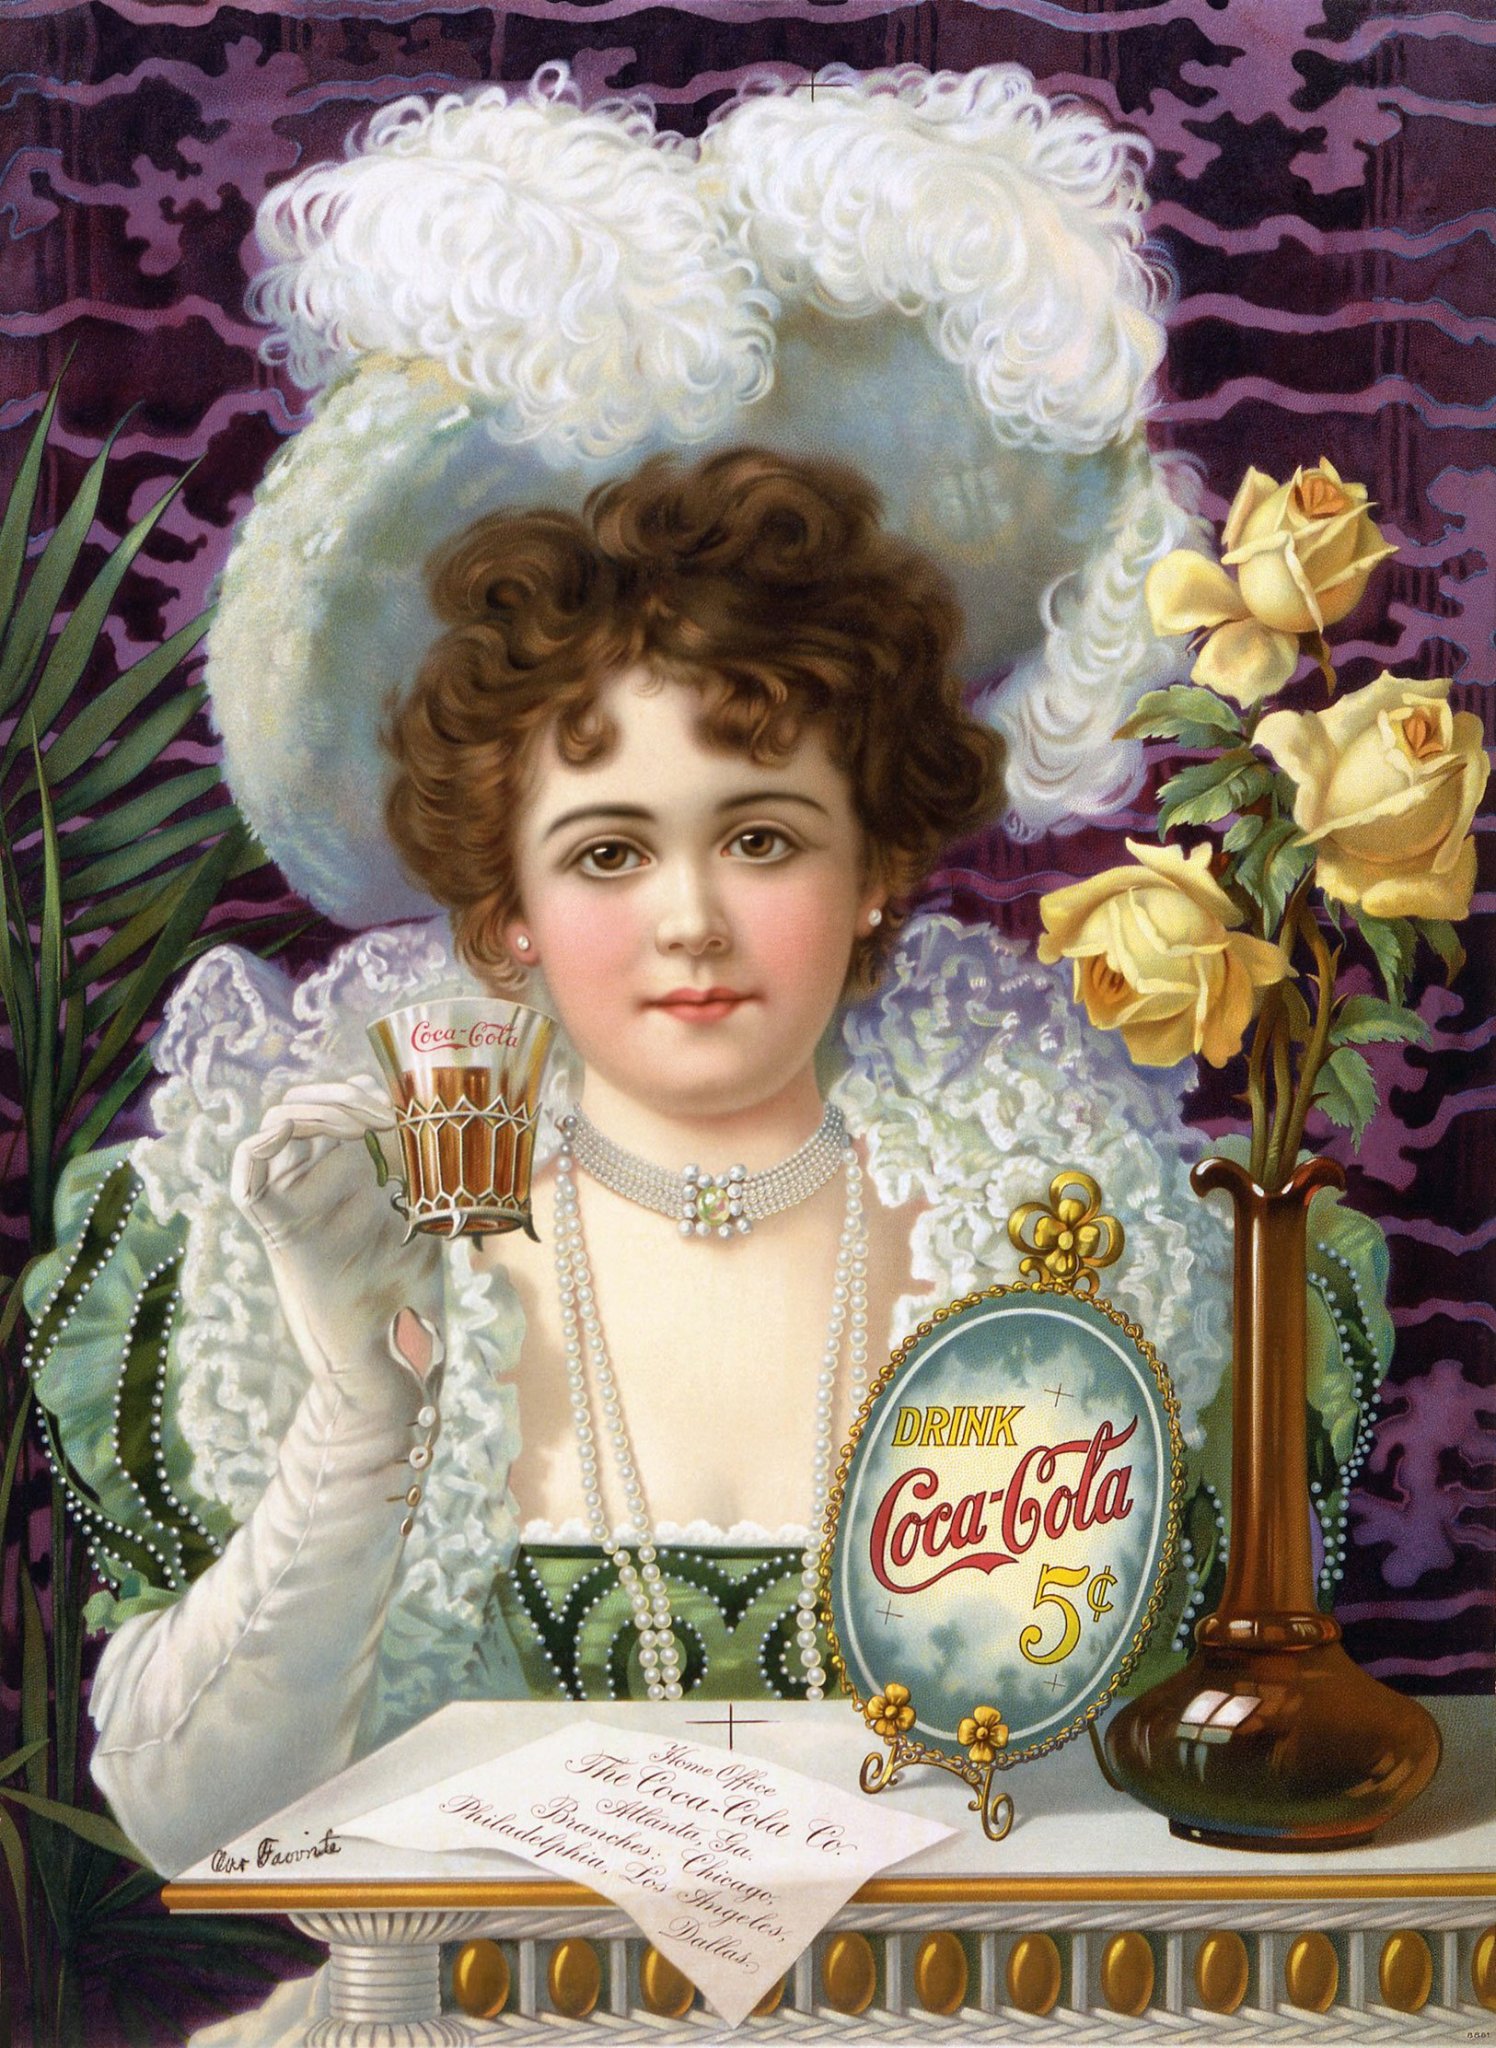 Coca-Cola ad with Hilda Clark, 1890s